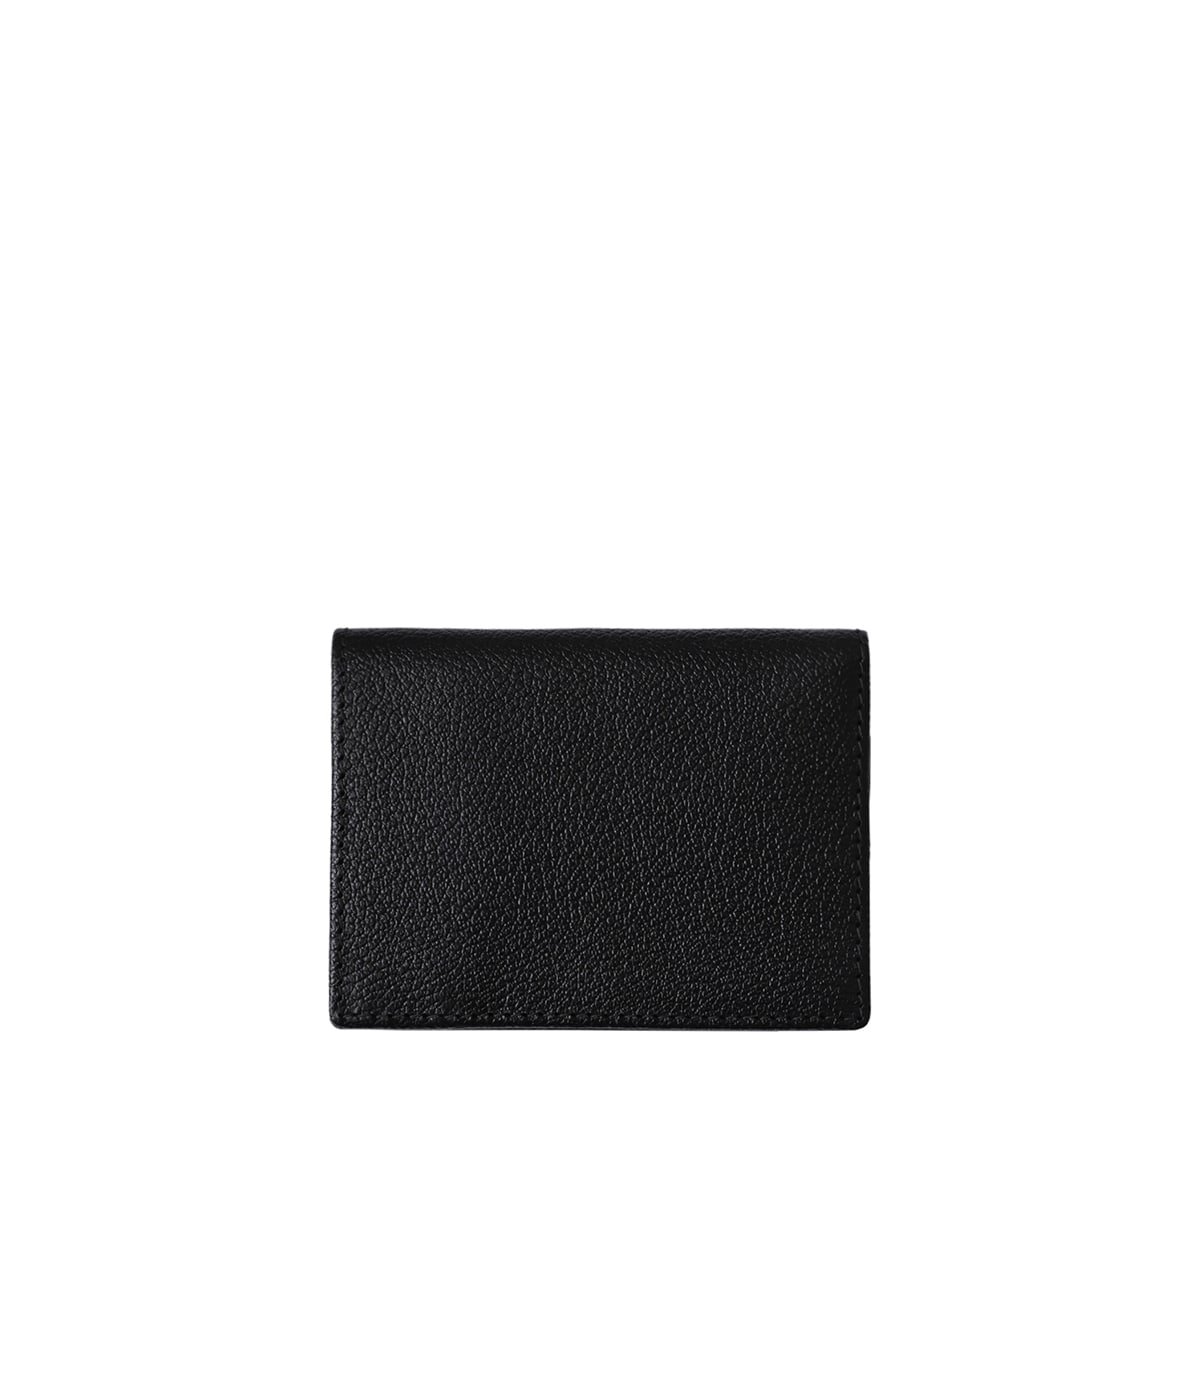 3Fold Wallet with Zipper